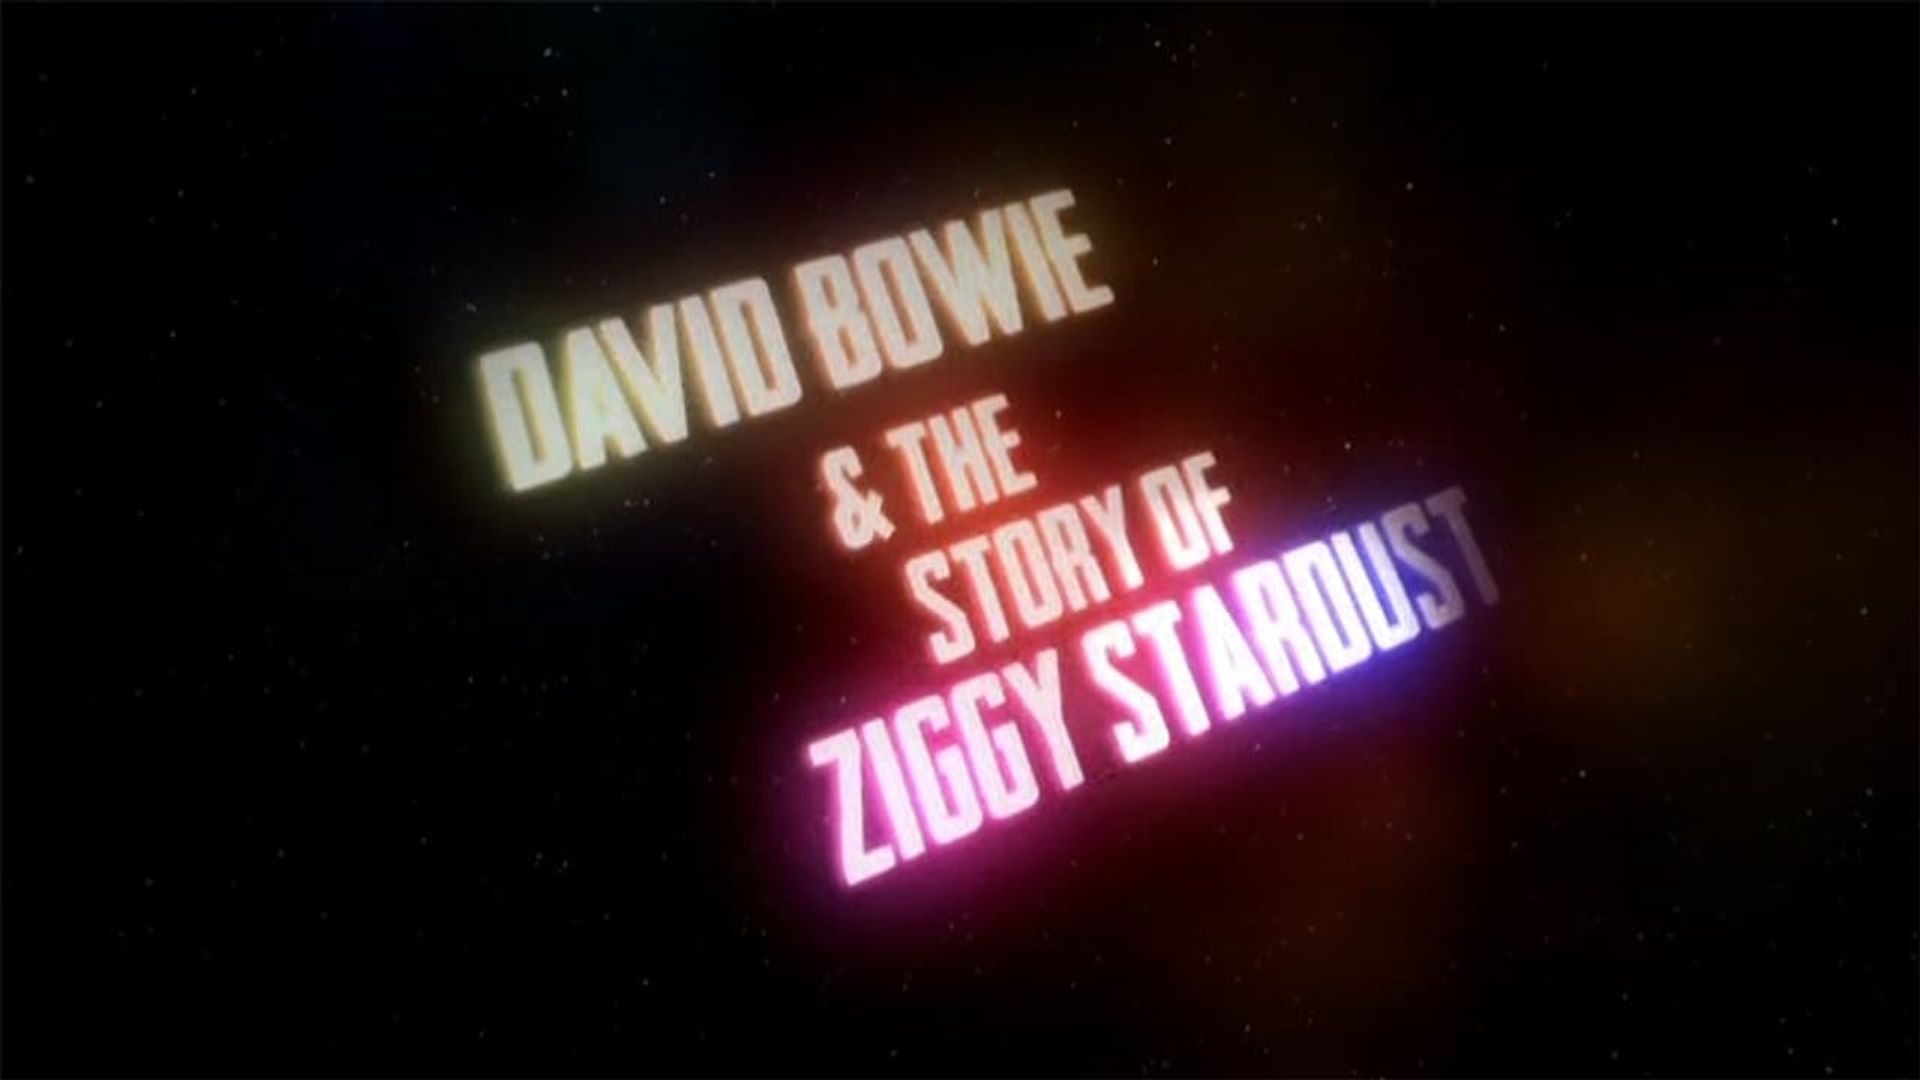 David Bowie & The Story of Ziggy Stardust Backdrop